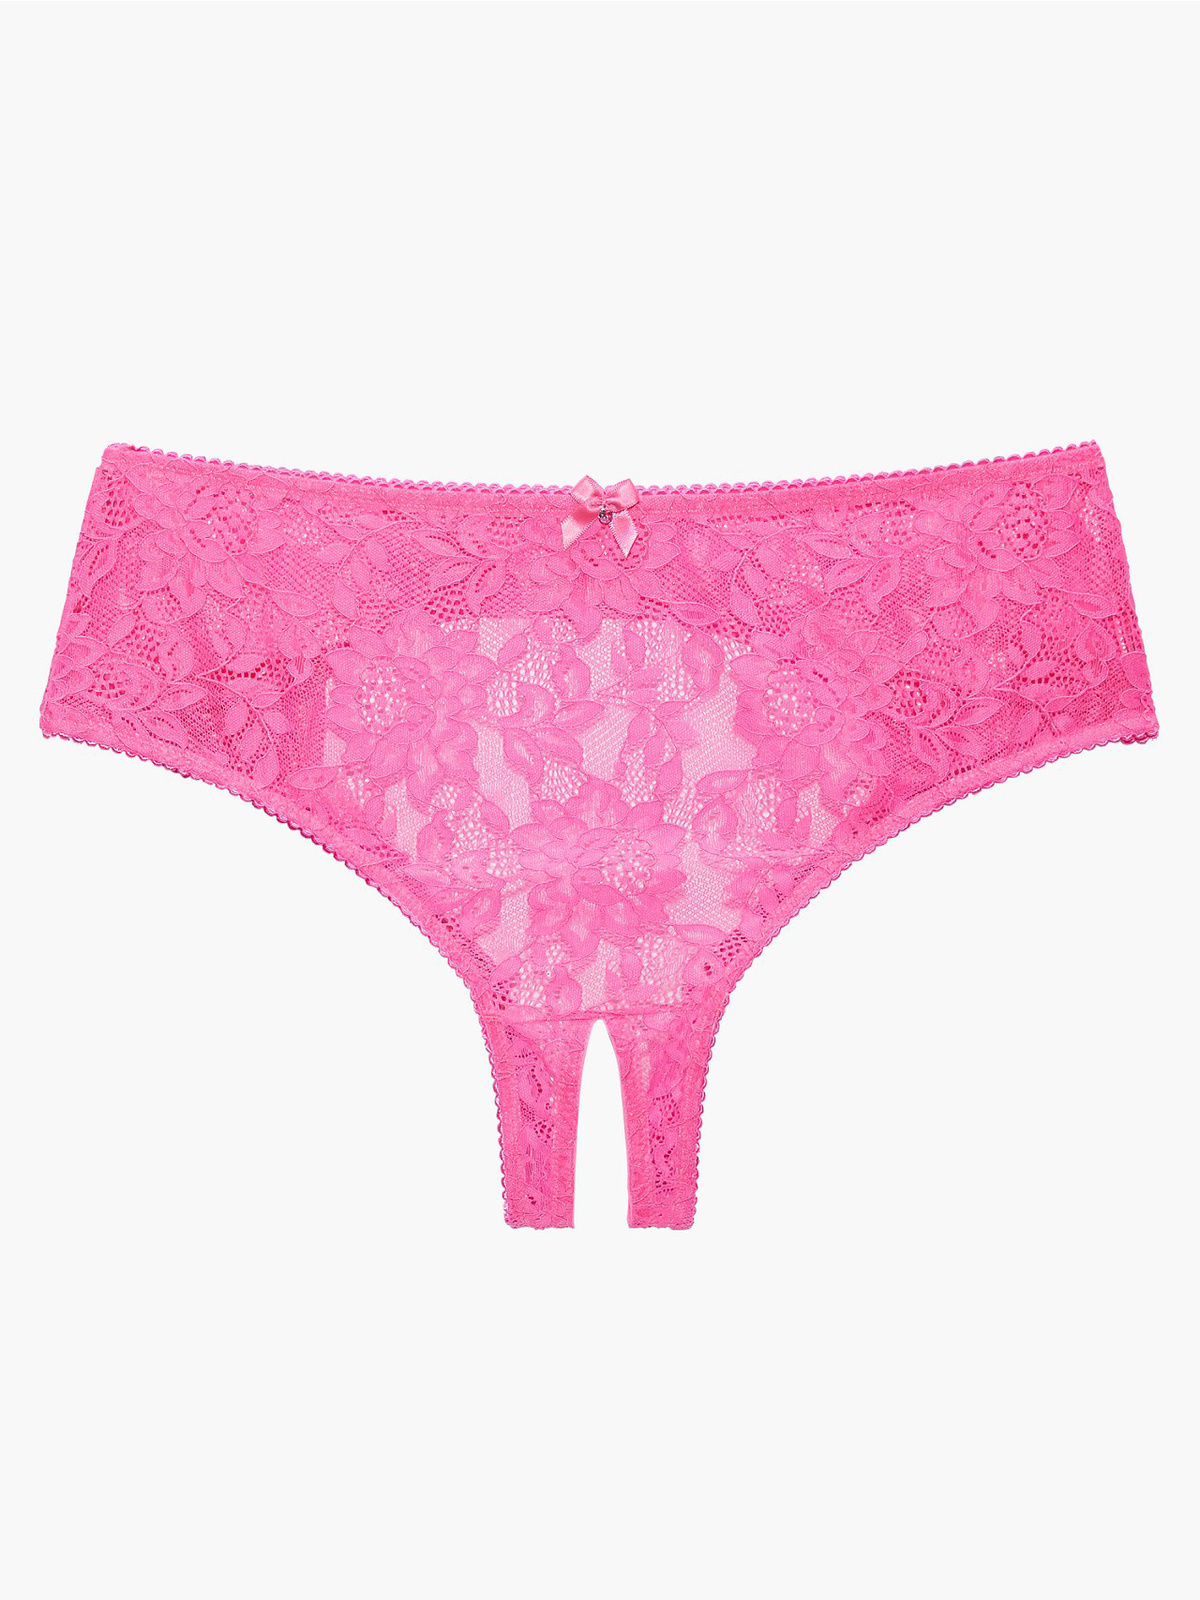 Lovelace Open Back Crotchless Bikini In Pink Savage X Fenty Uk United